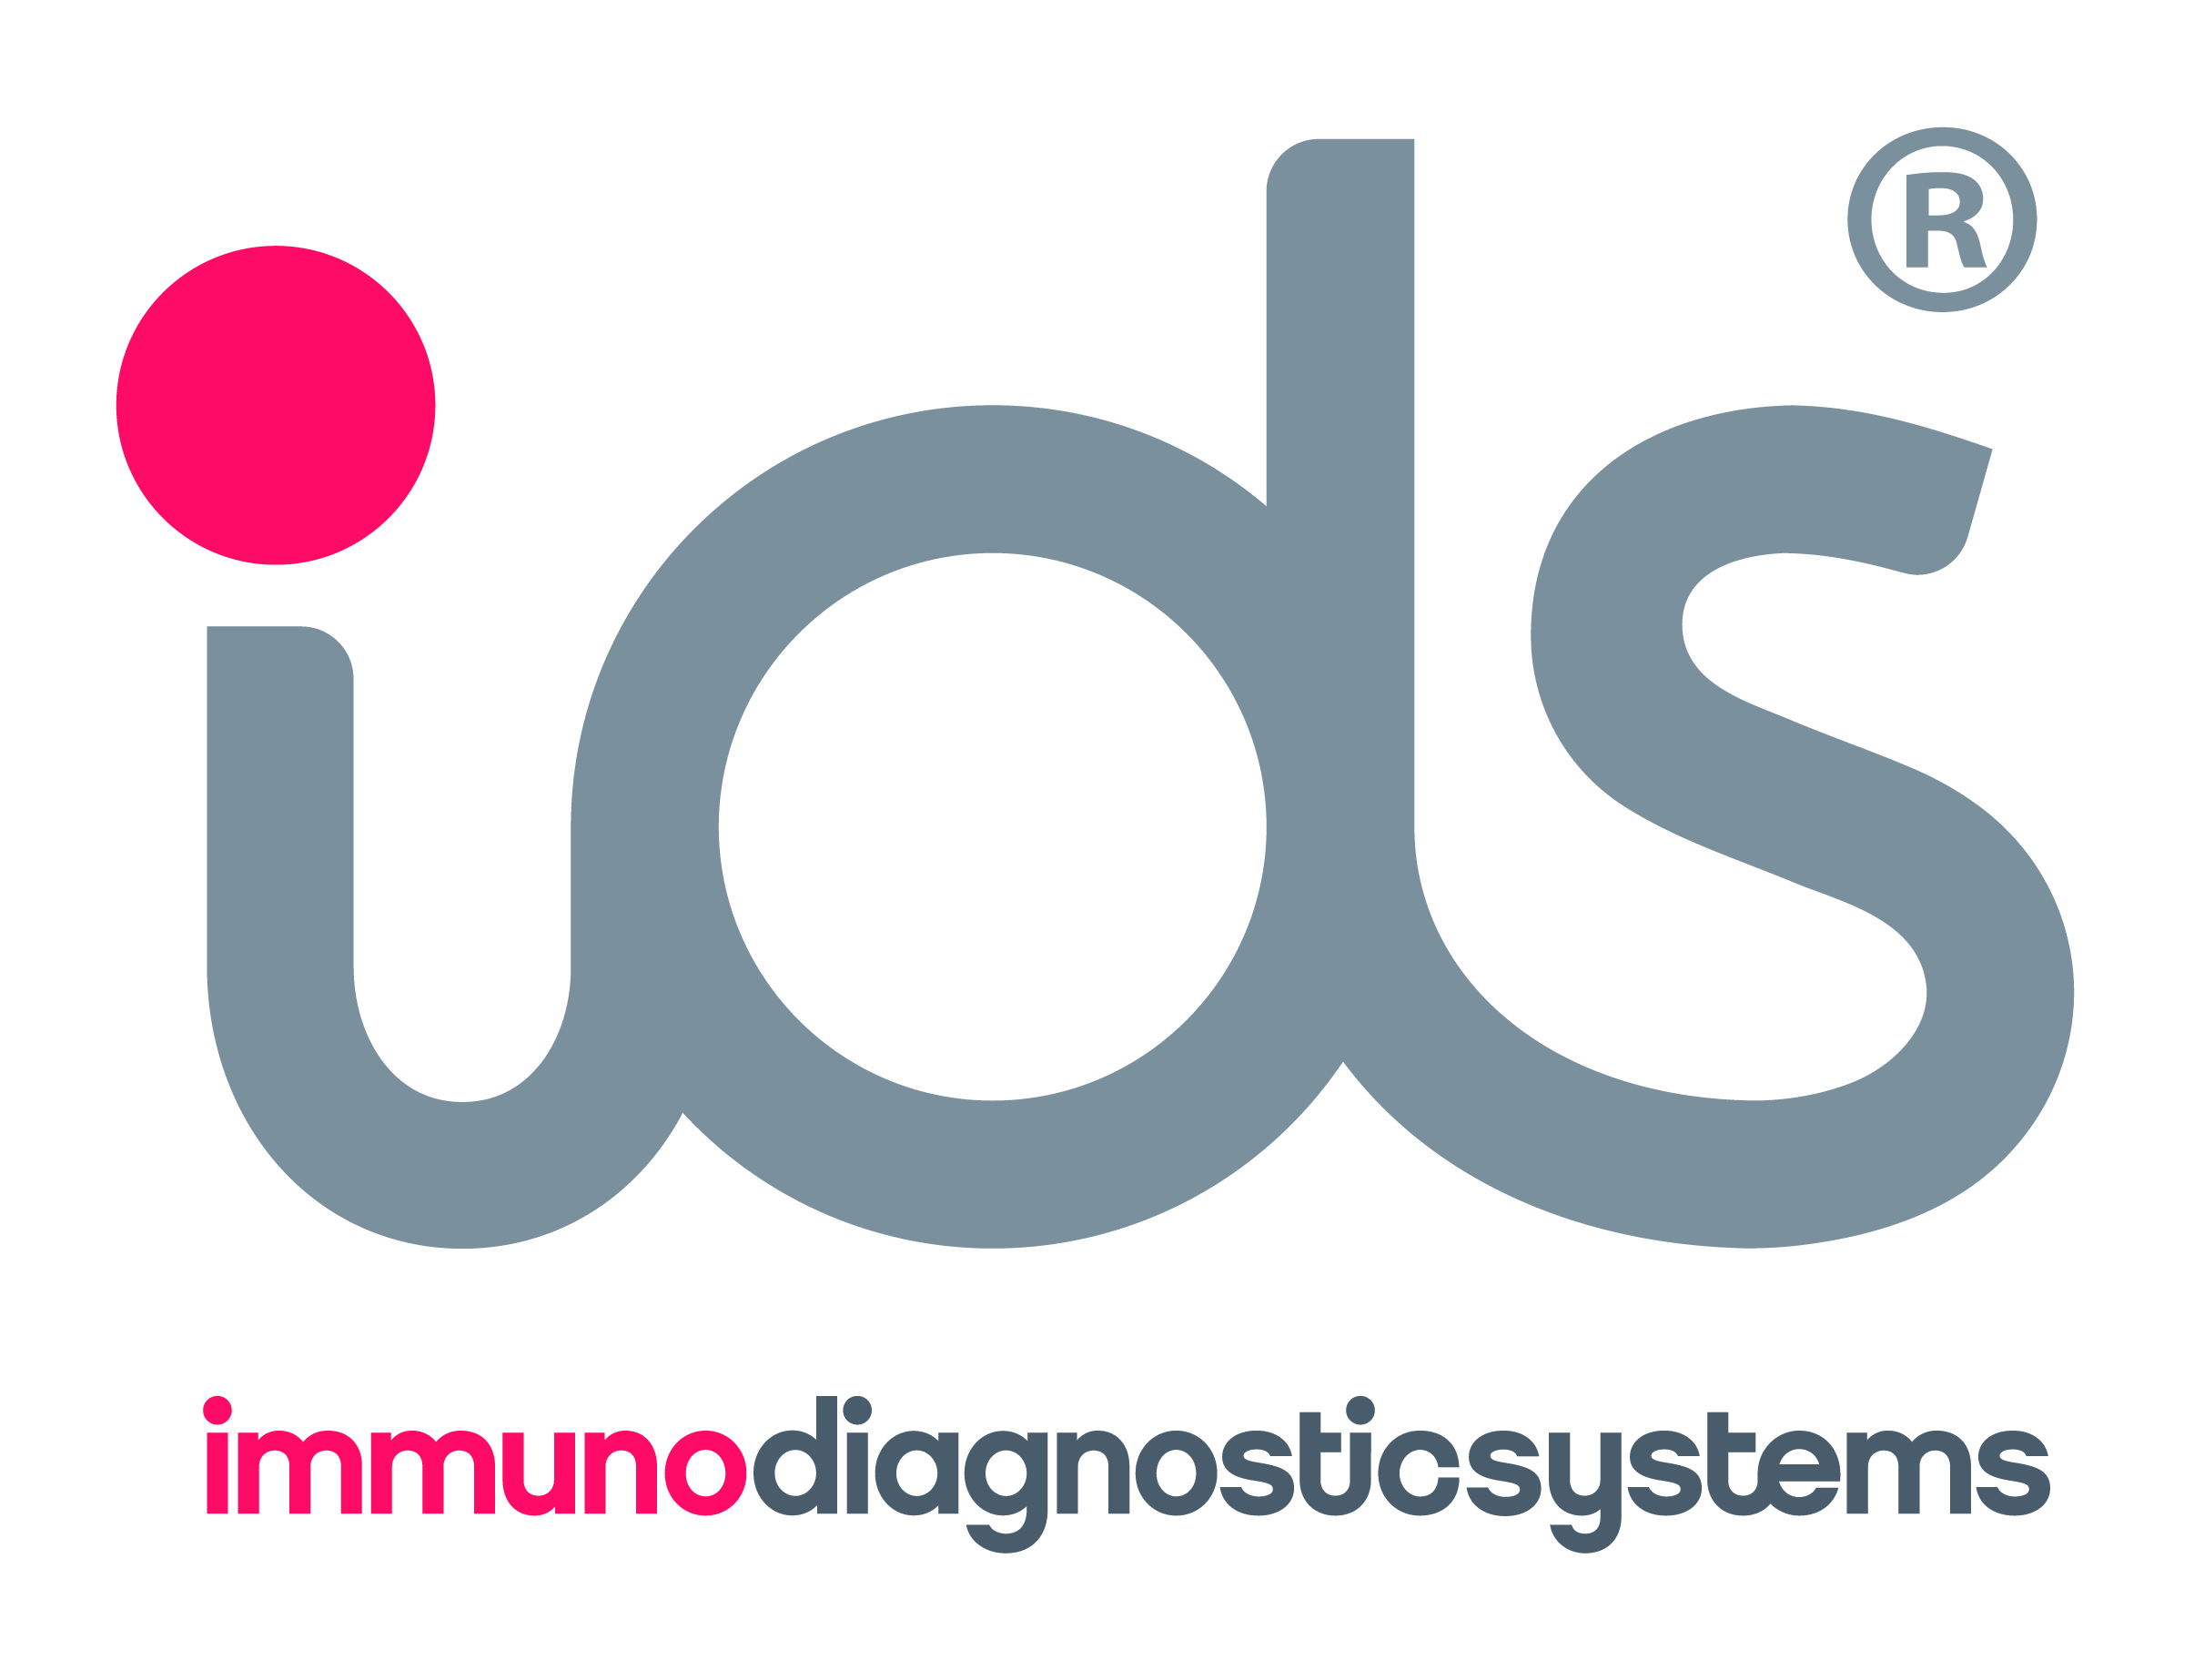 ids-logo